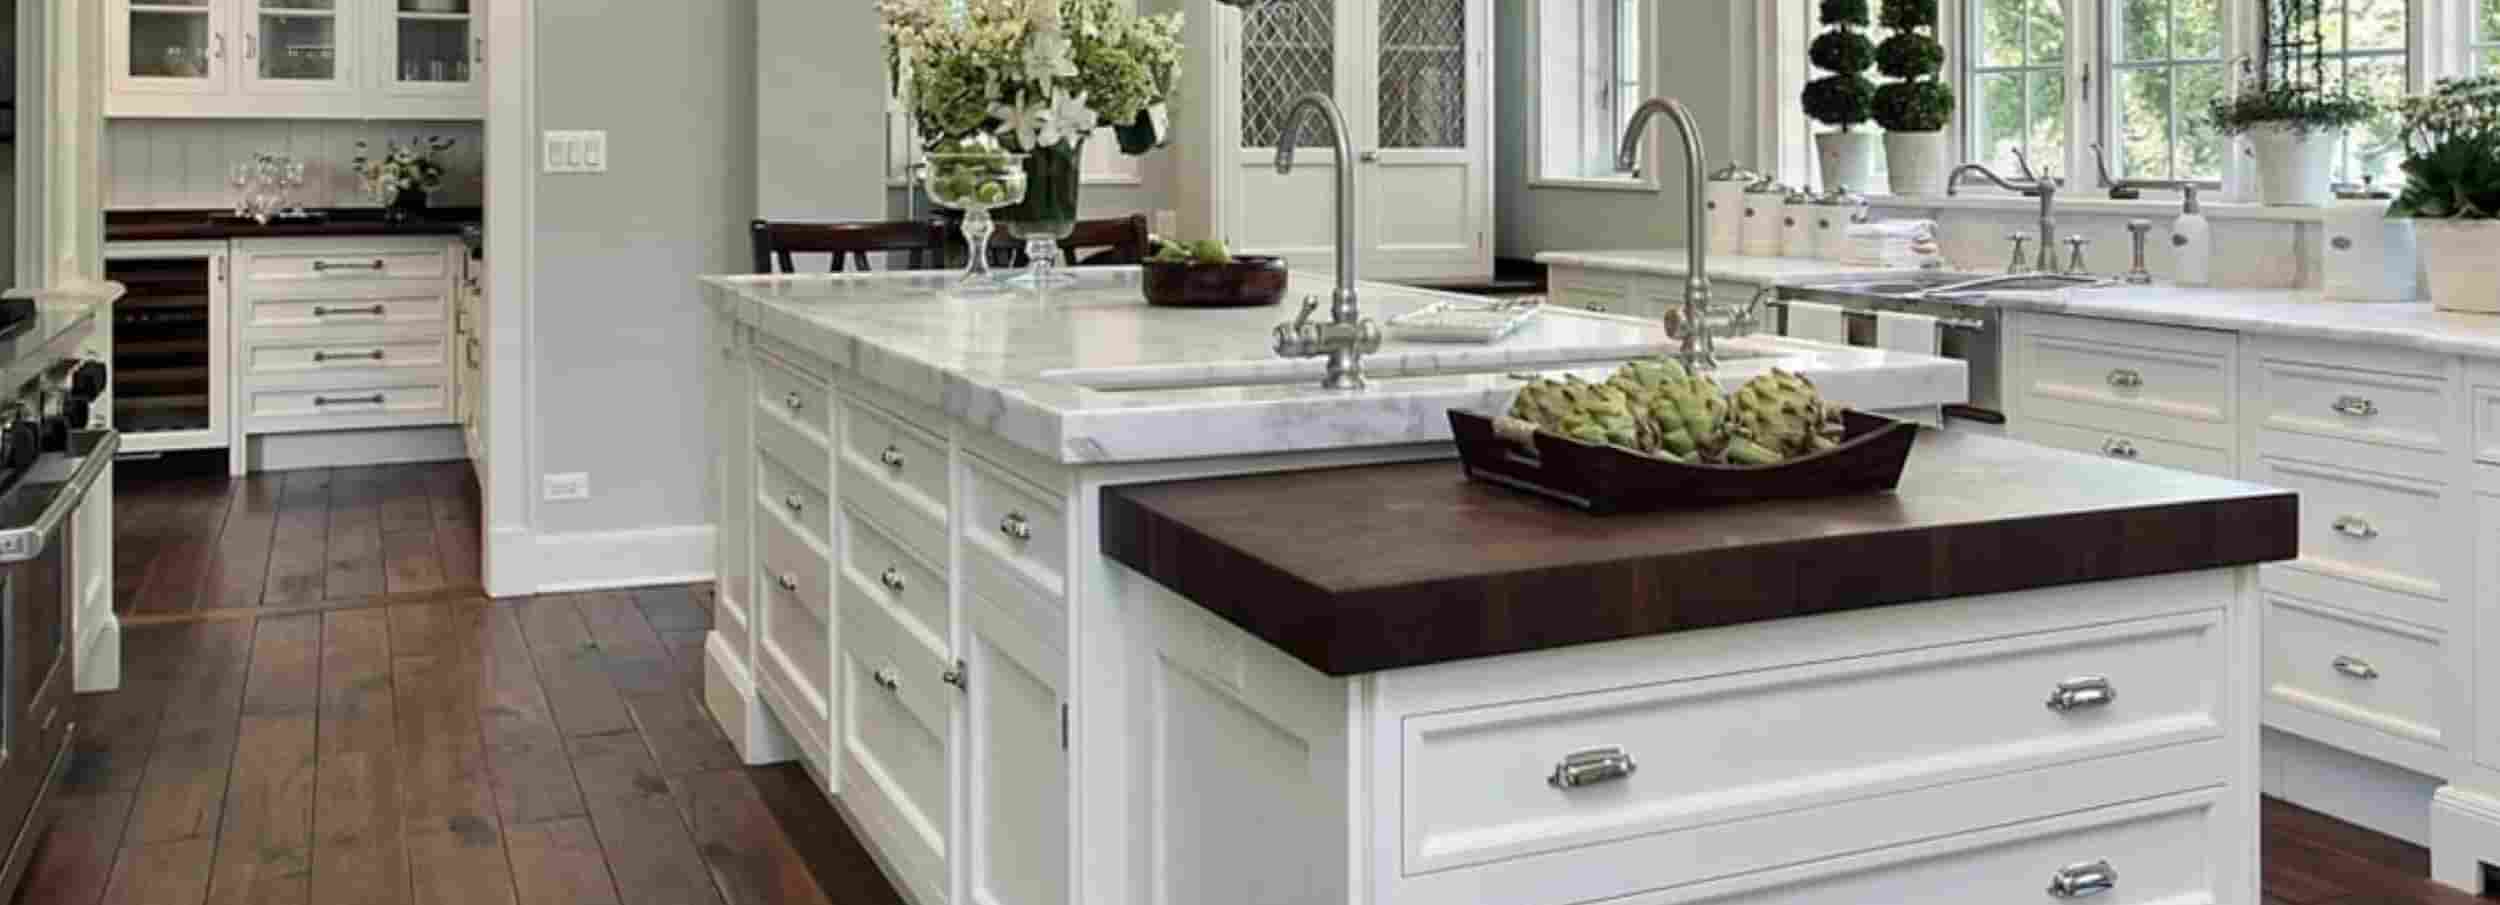 Modern, bright white kitchen with island and dark hardwood floors.